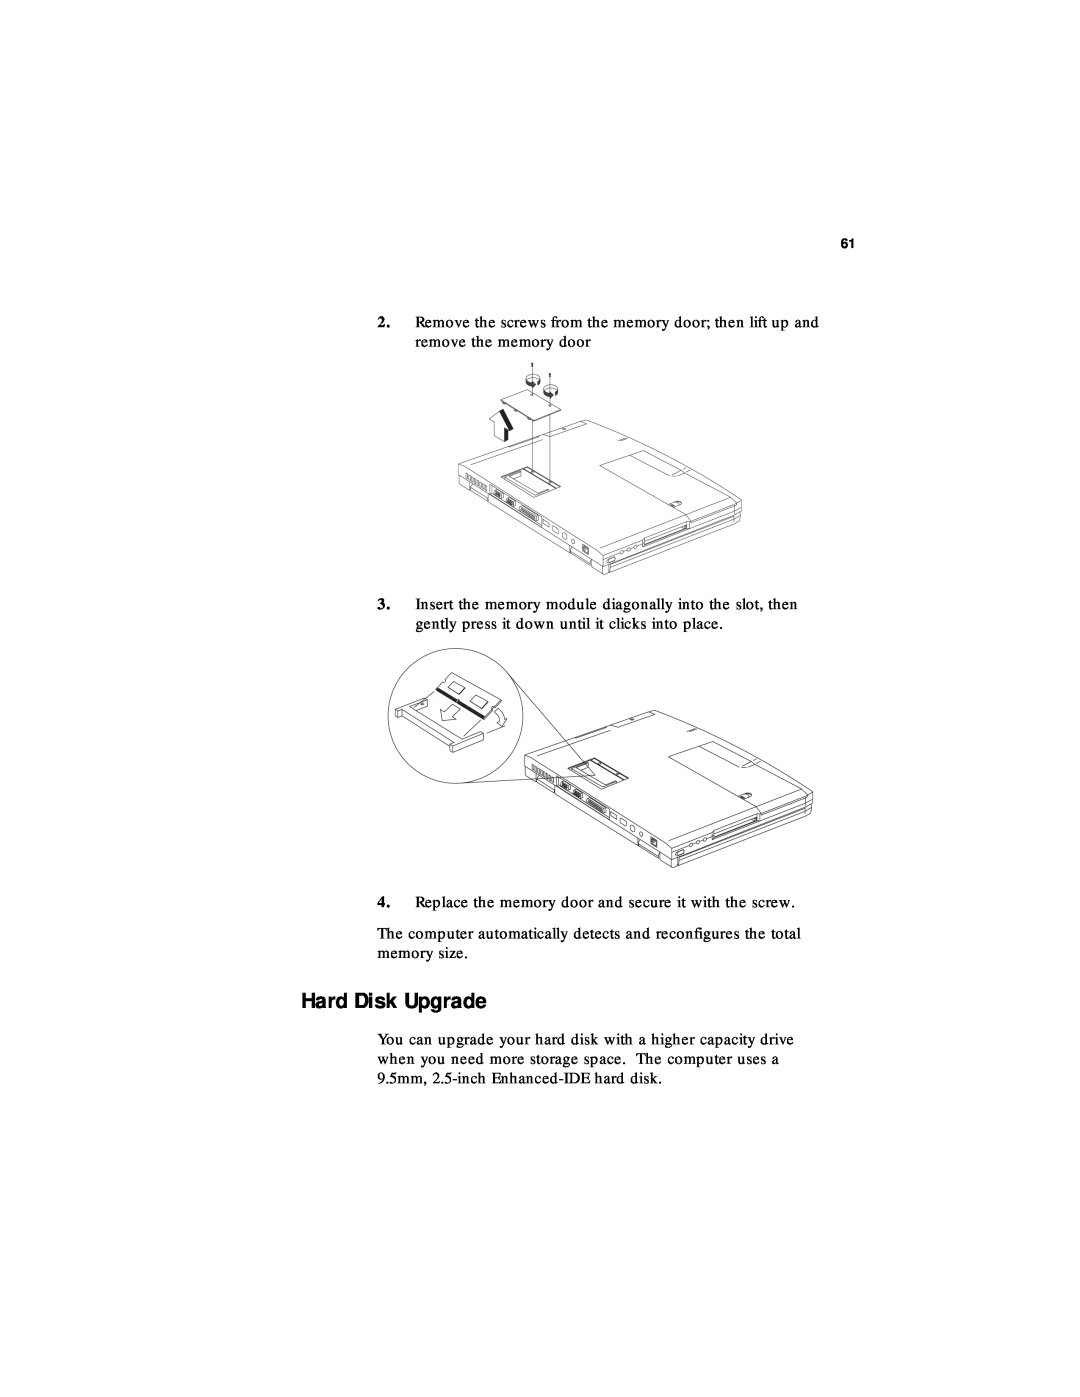 Acer 330 Series manual Hard Disk Upgrade 